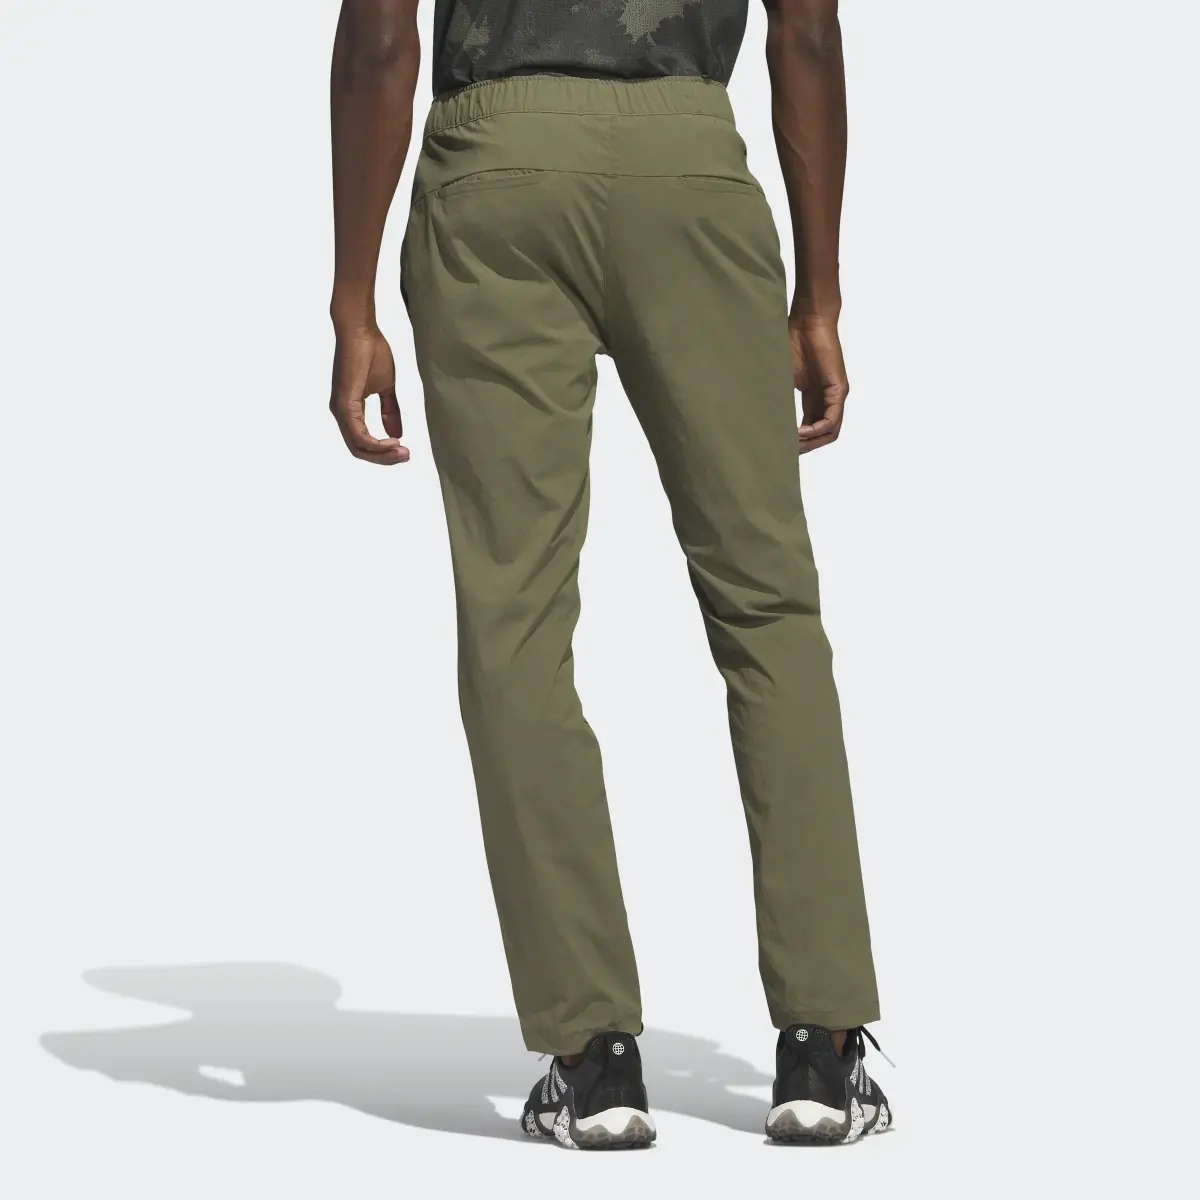 Adidas Golf Pants. 2